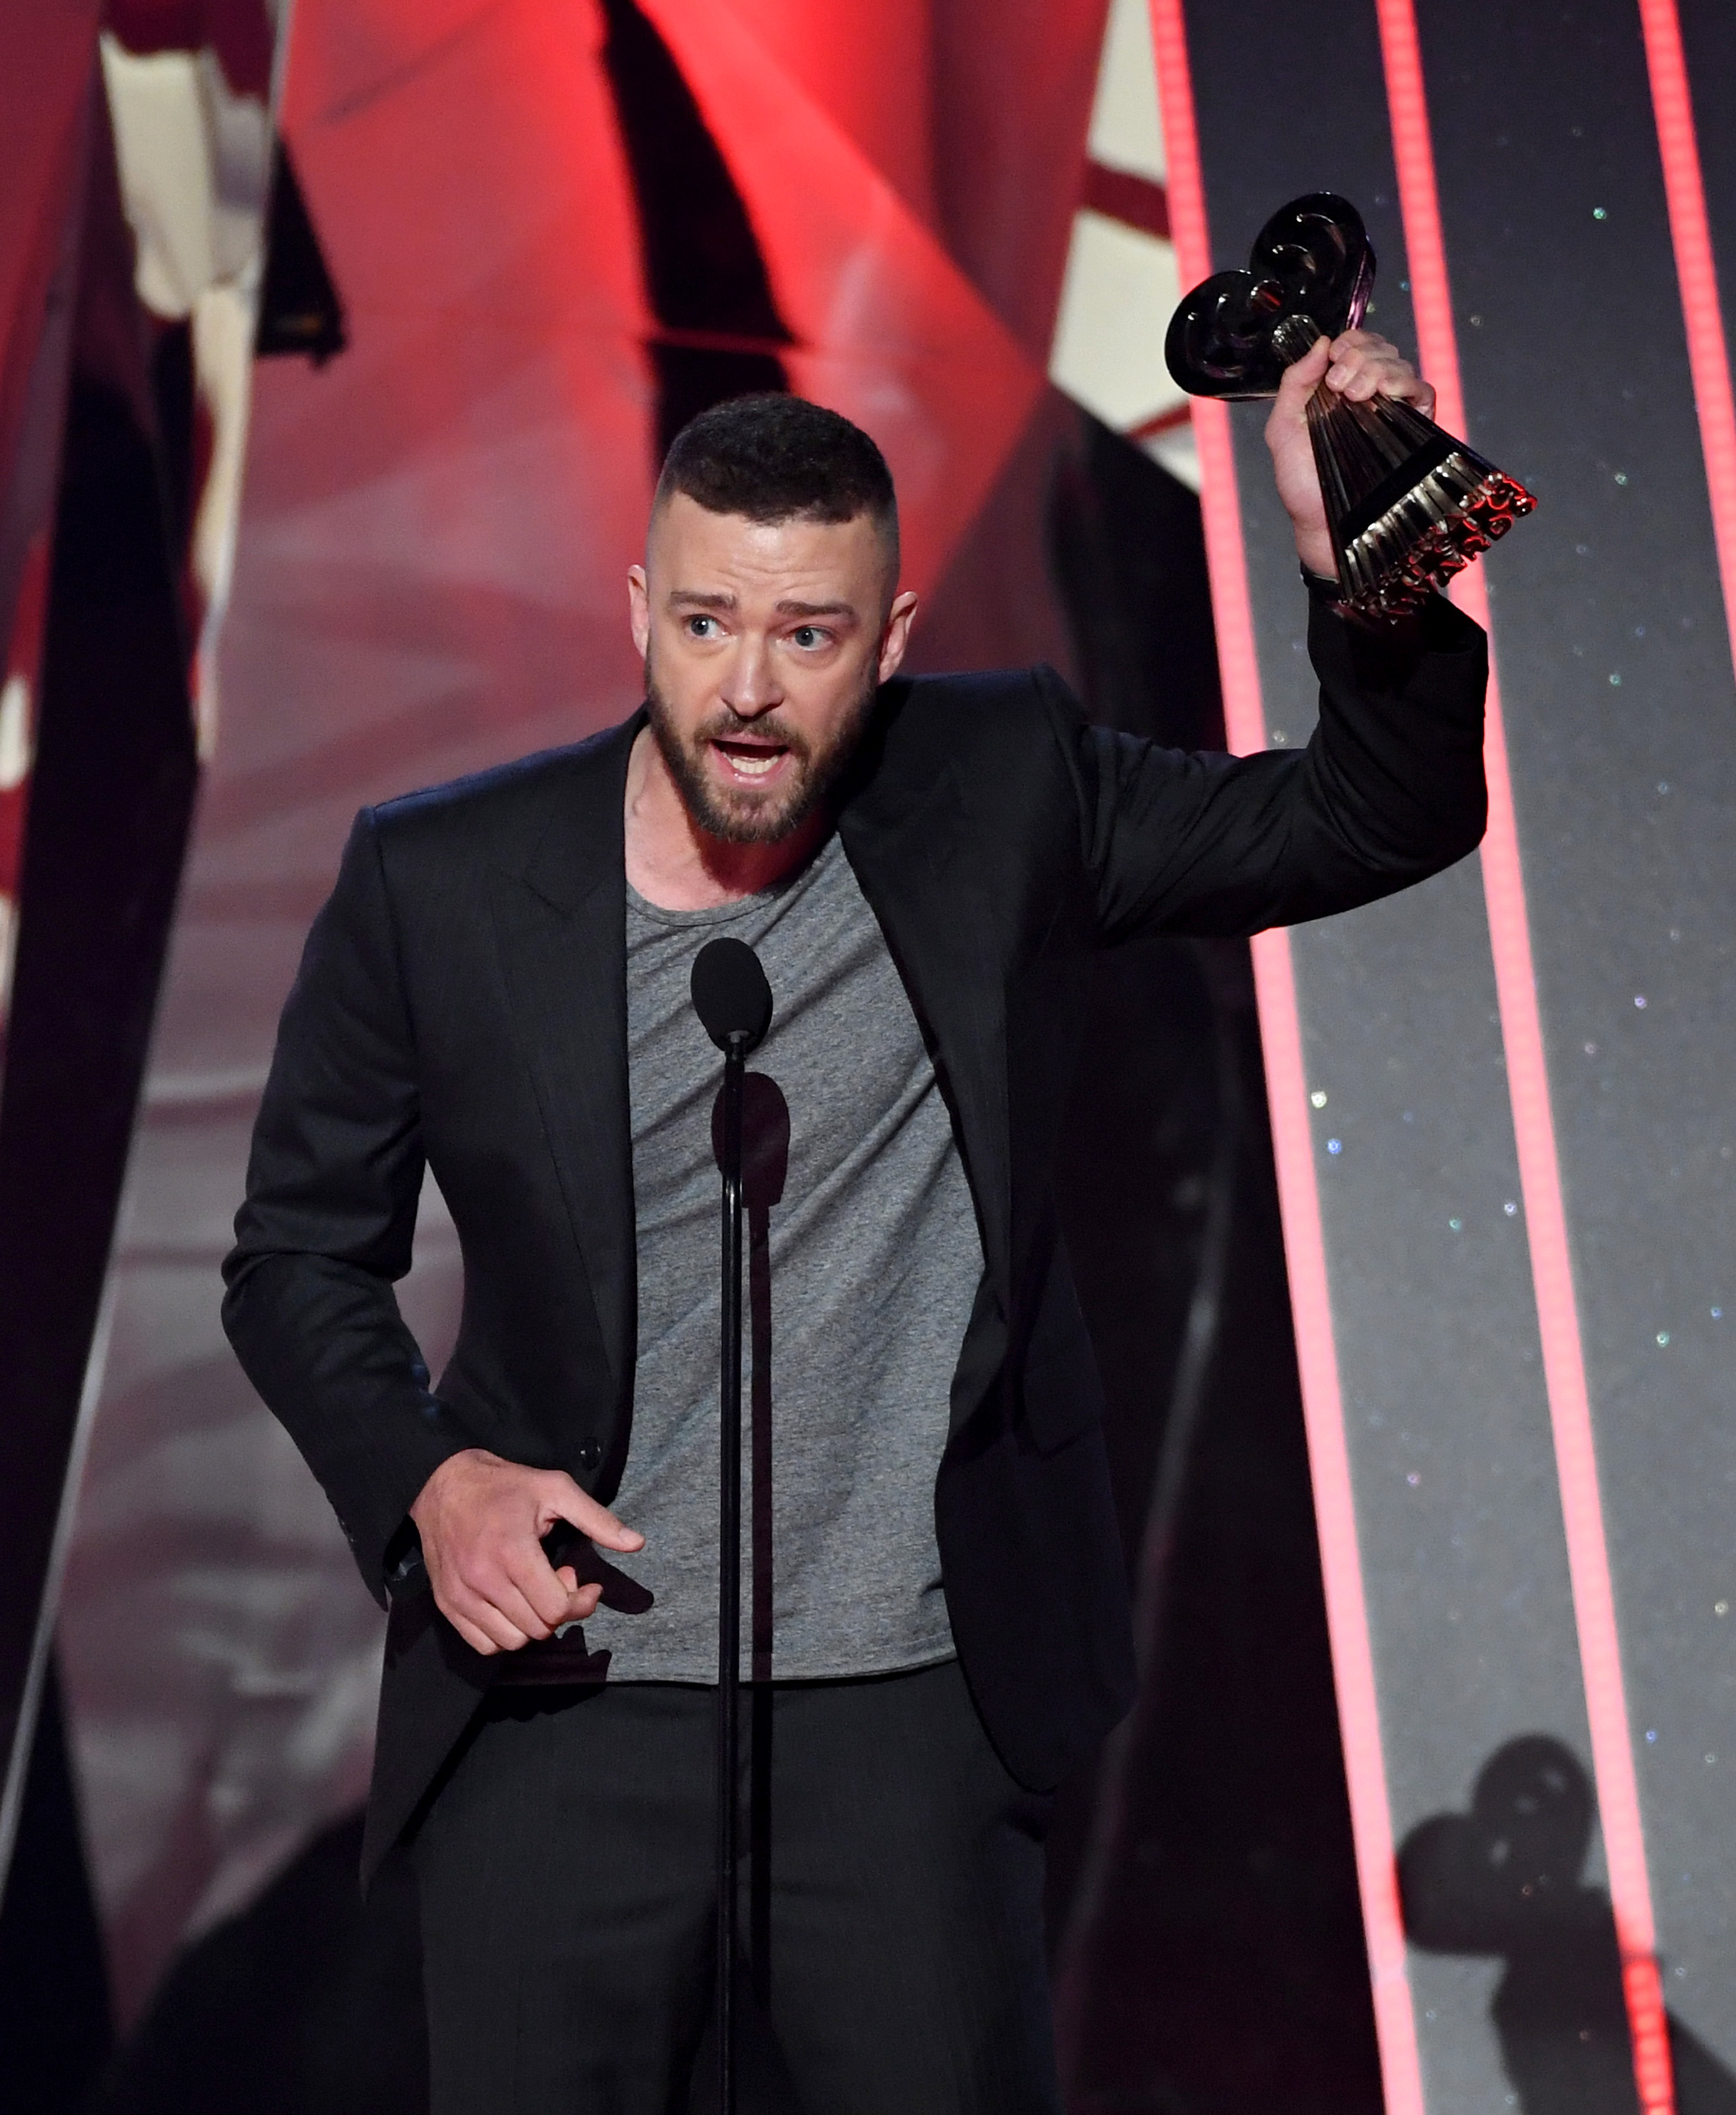 Justin Timberlake at the iHeartRadio Awards